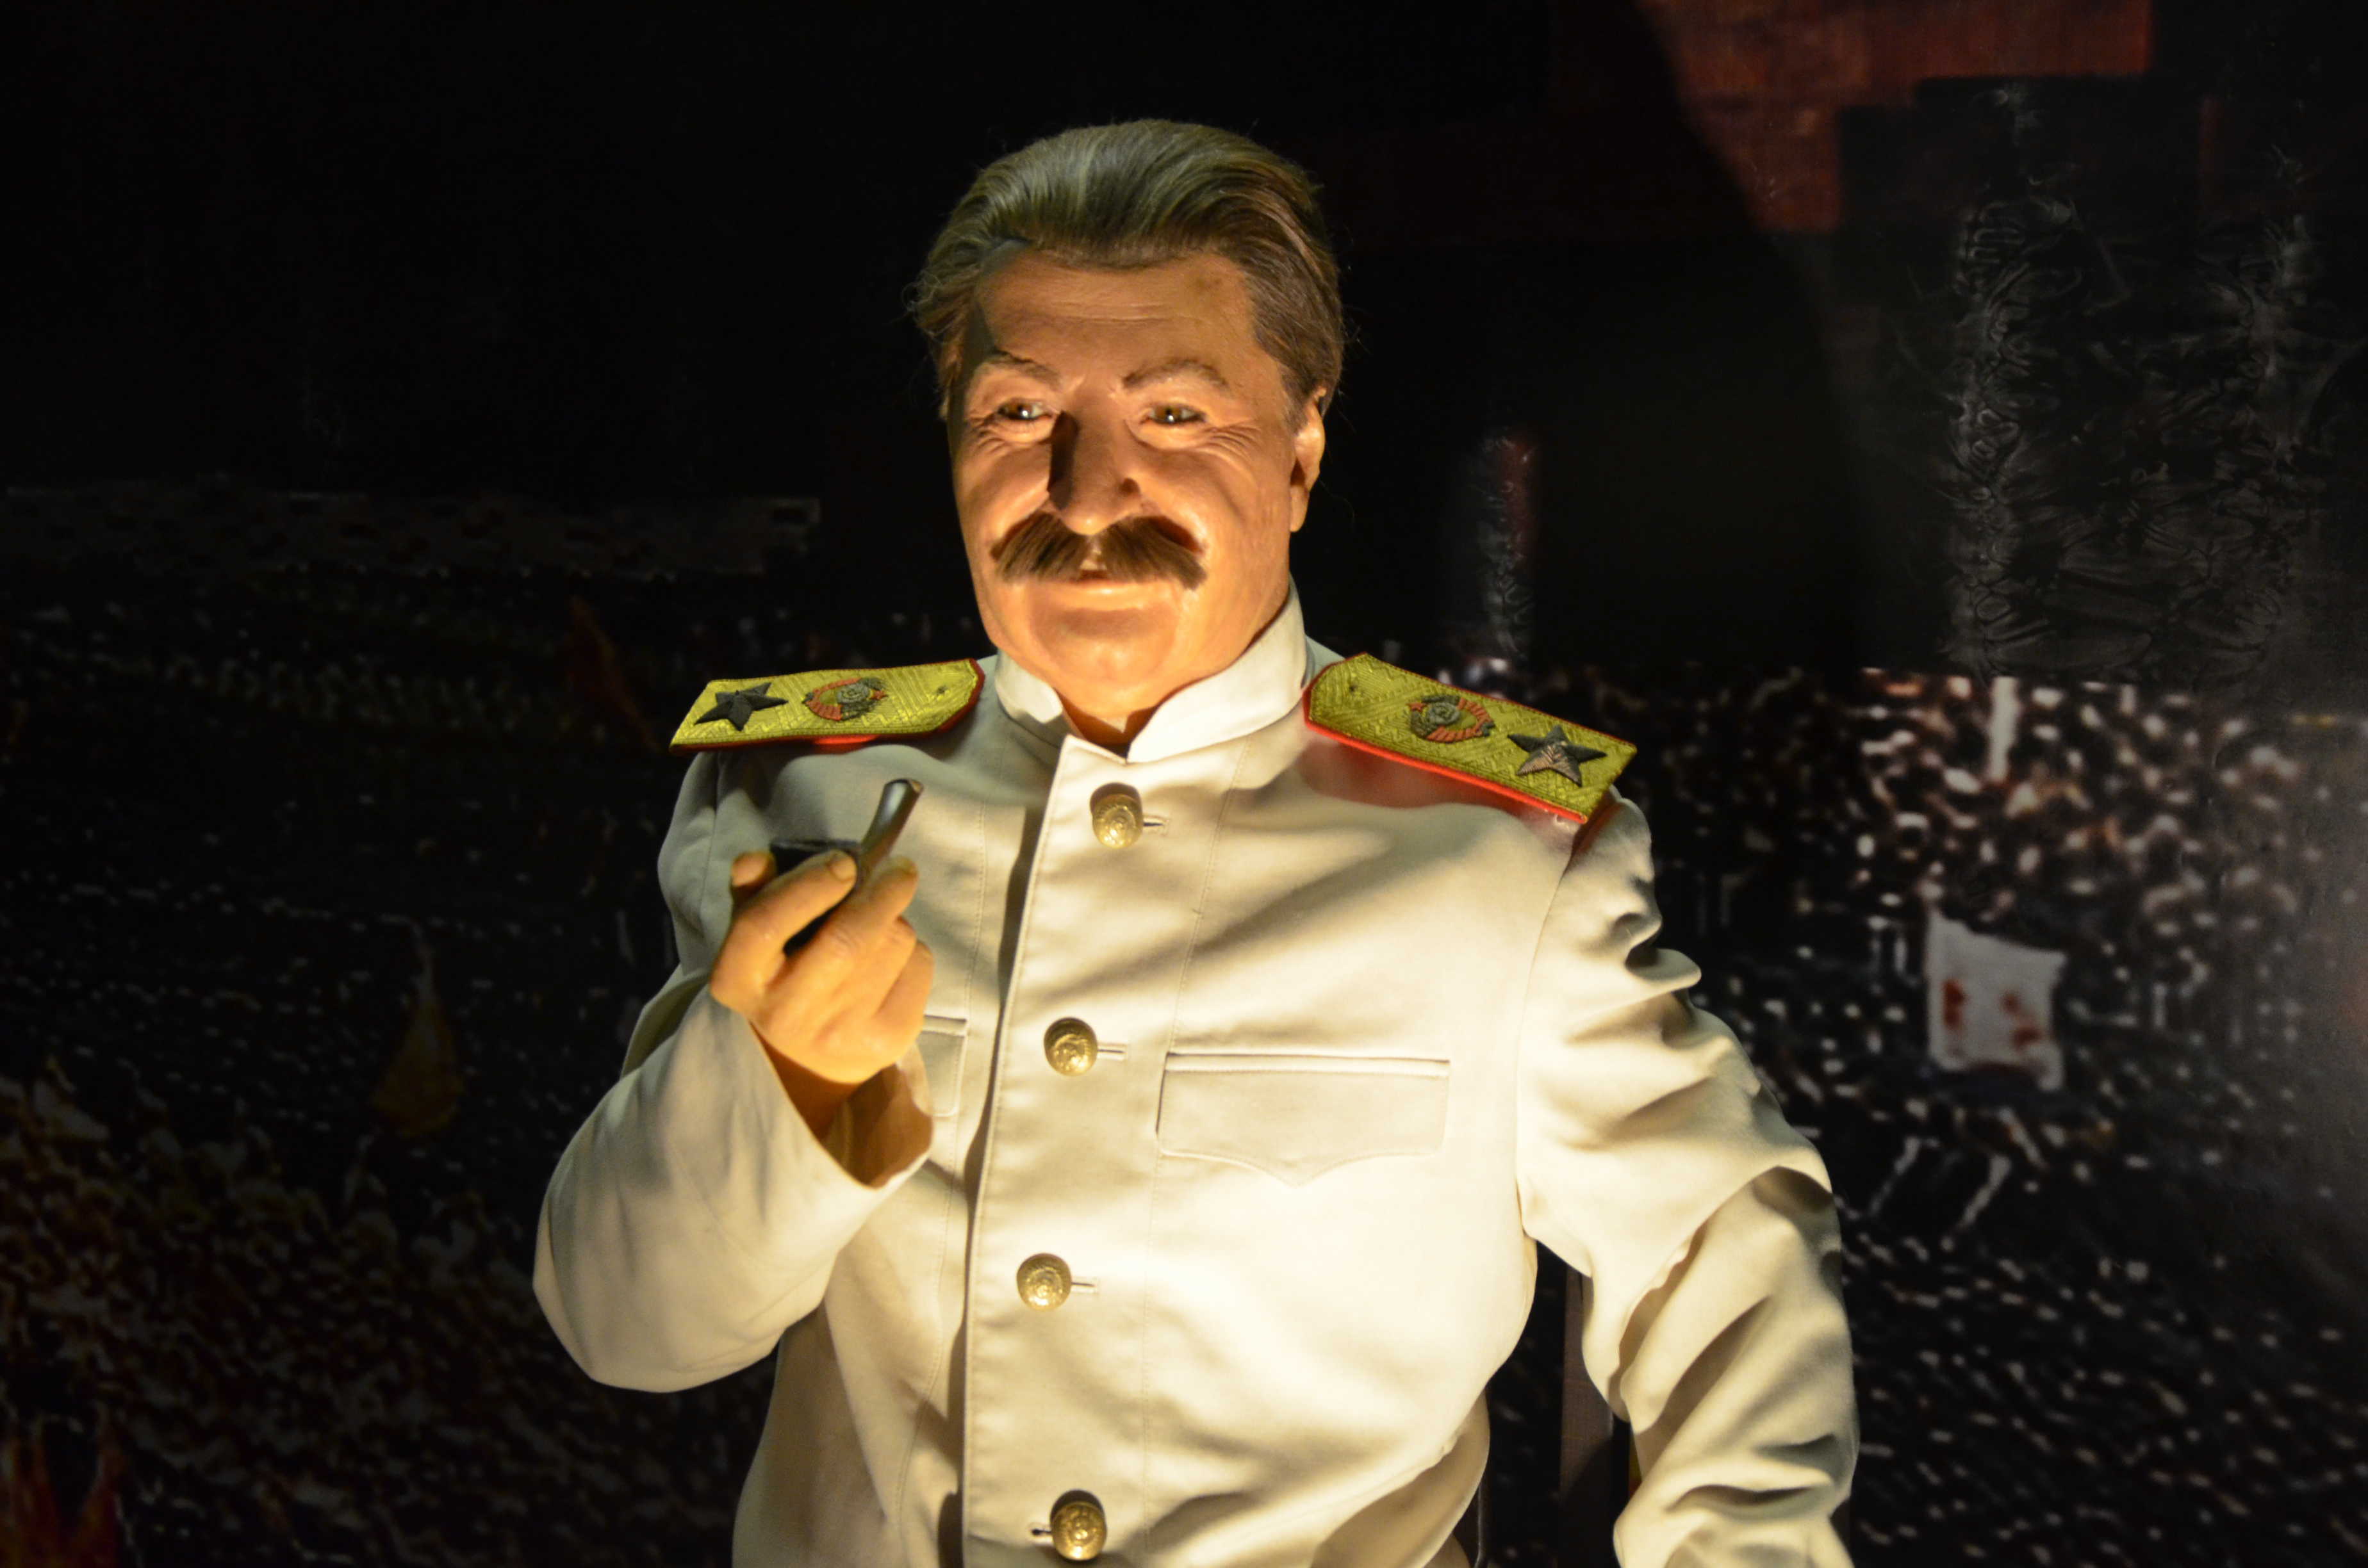 Joseph Stalin at Jale Kuşhan Wax Museum at Istanbul Sapphire in Turkey